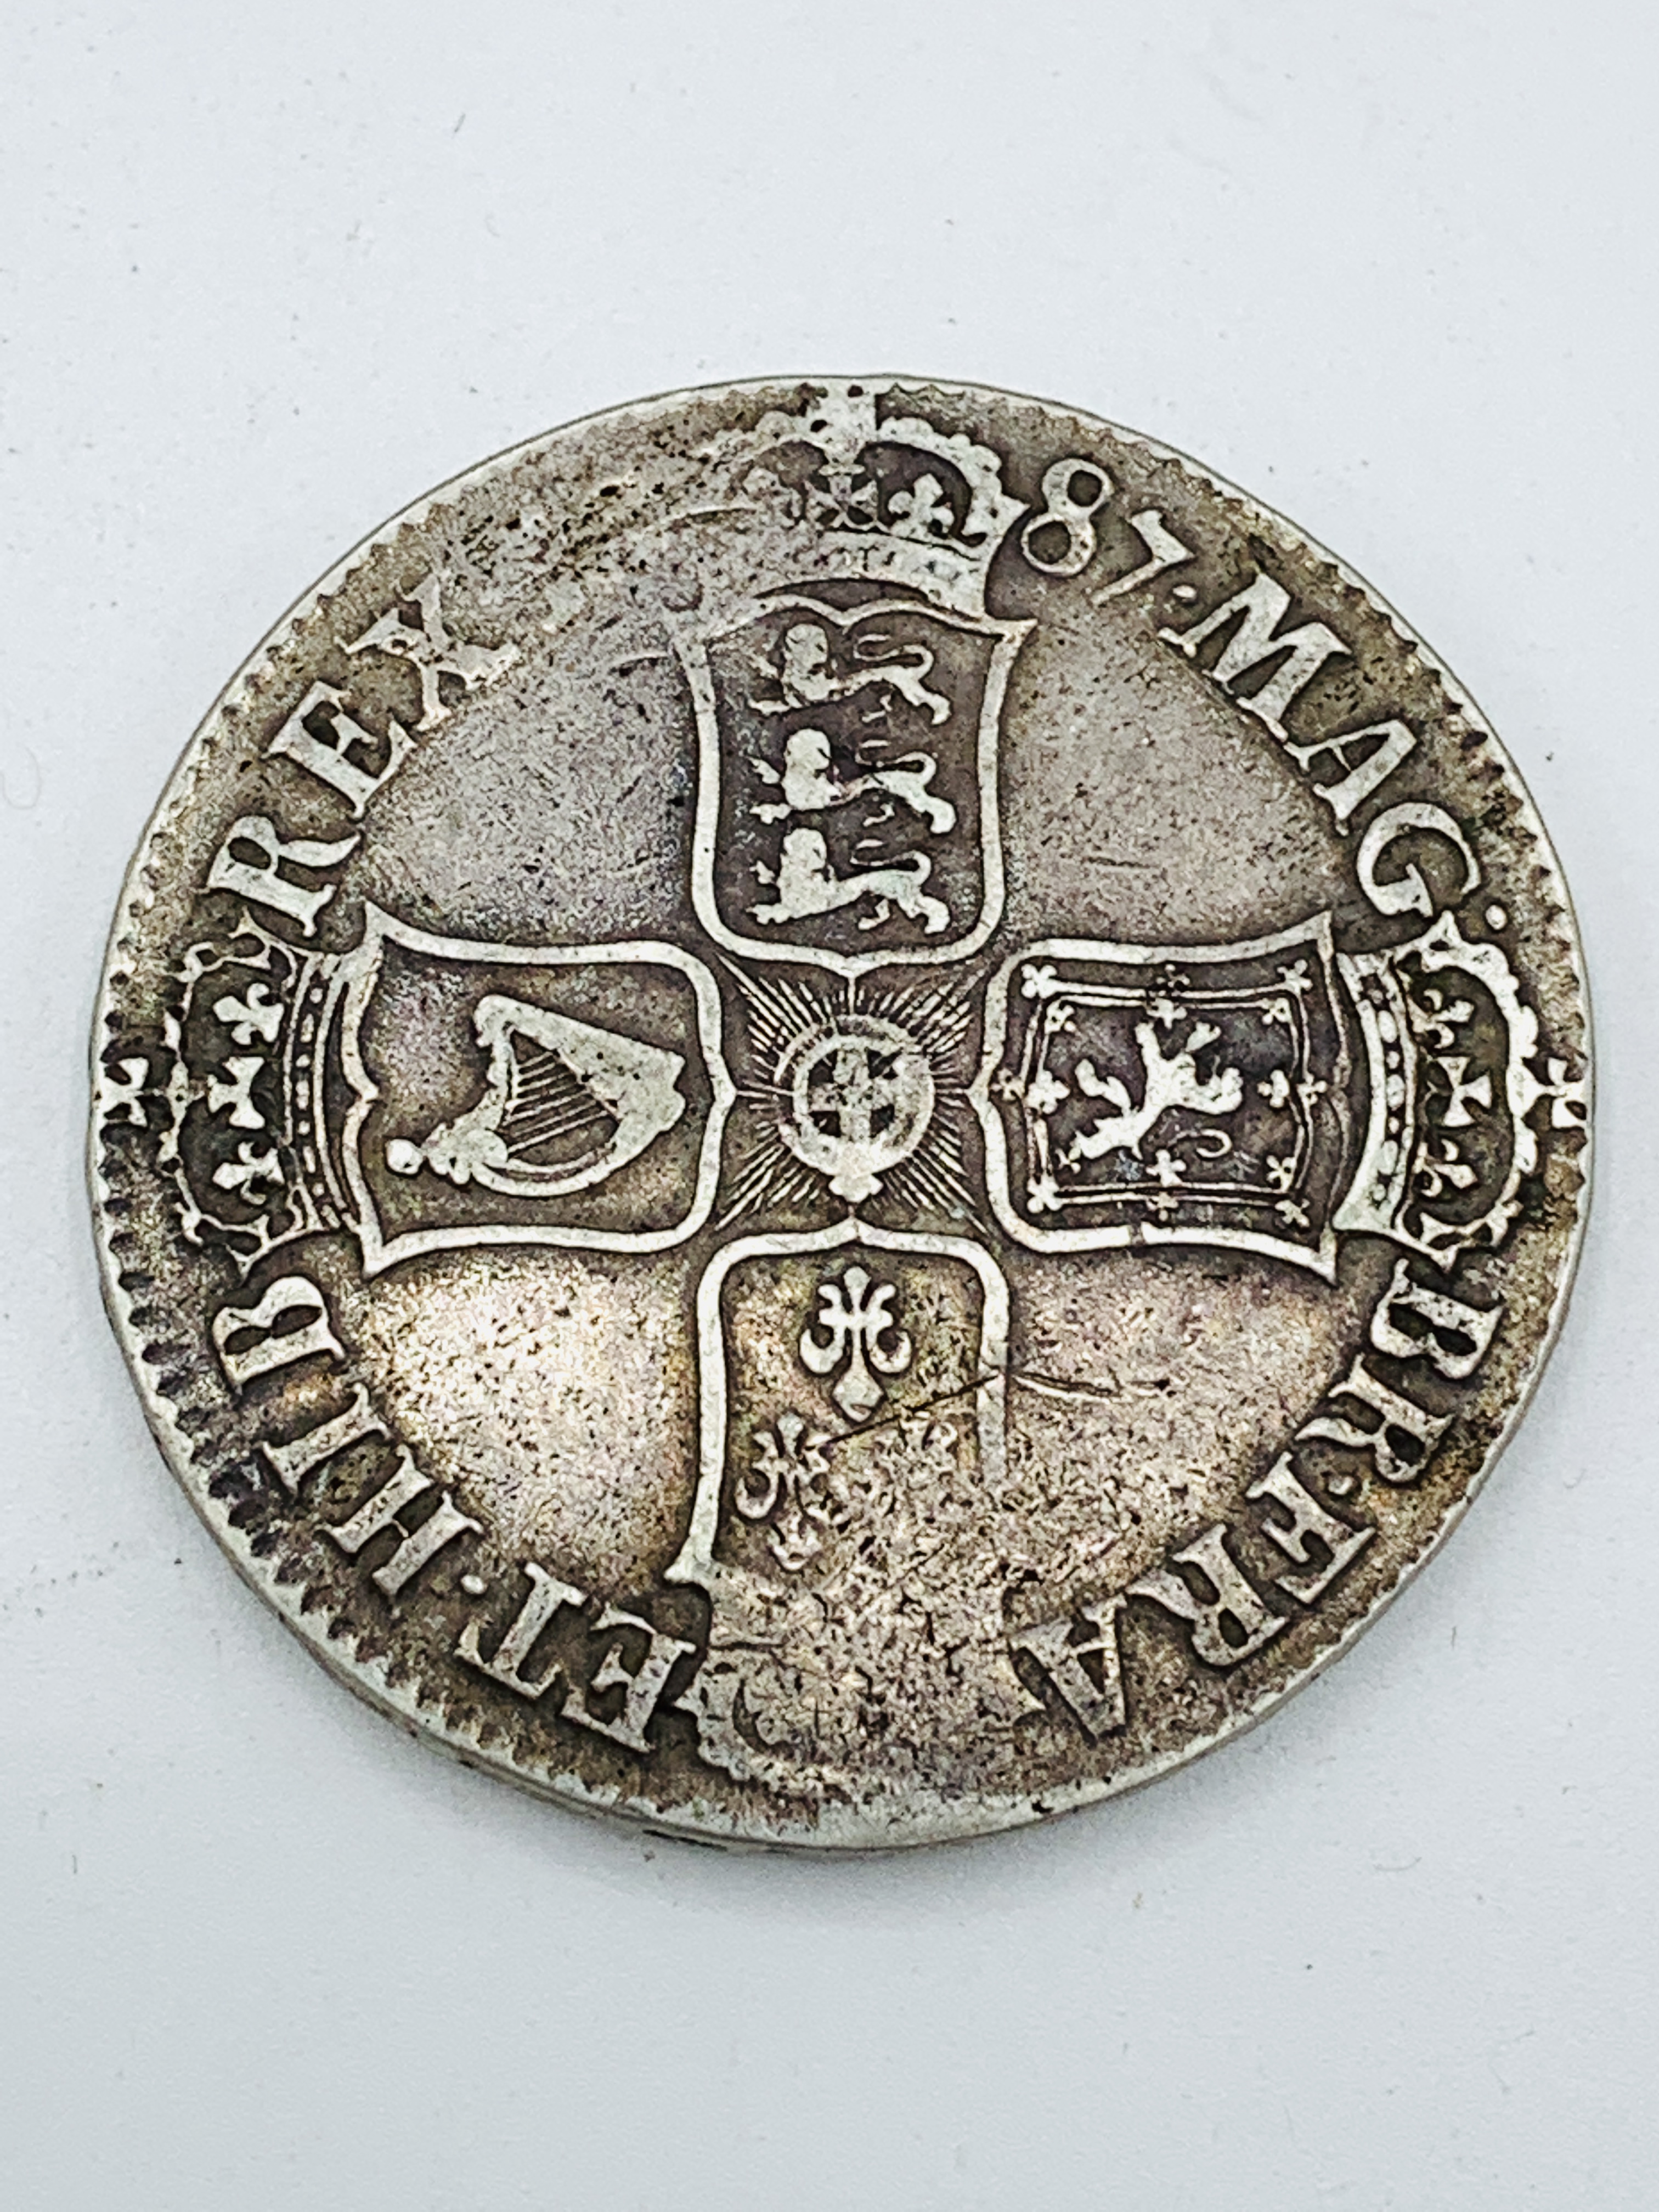 James II silver crown 1687 - Image 2 of 3